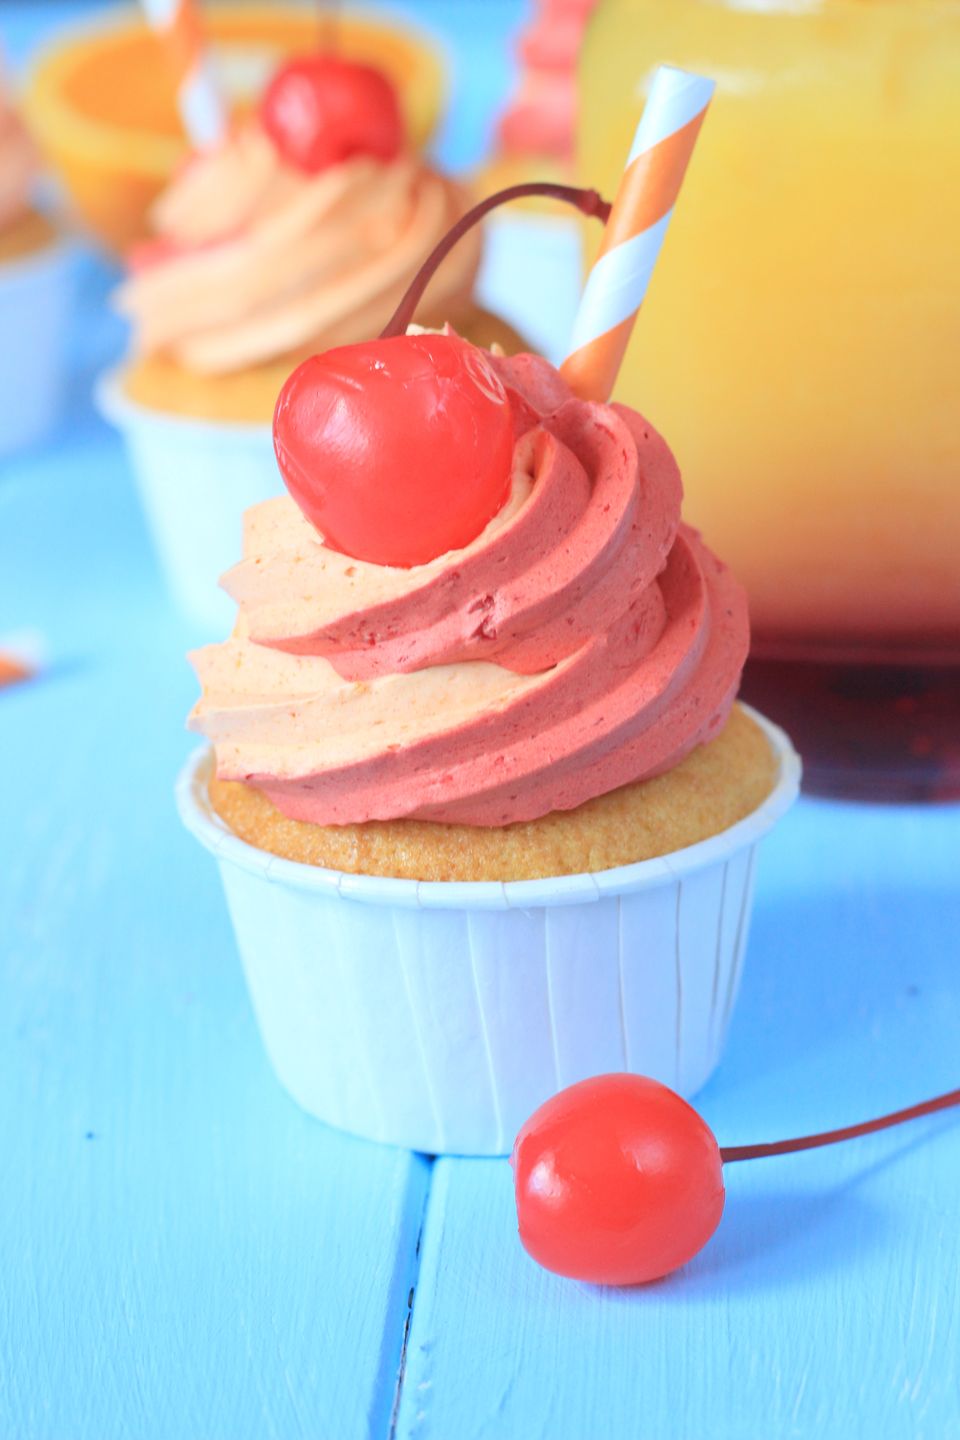 Tequila Sunrise Cupcake - inspiriert vom Sommer!